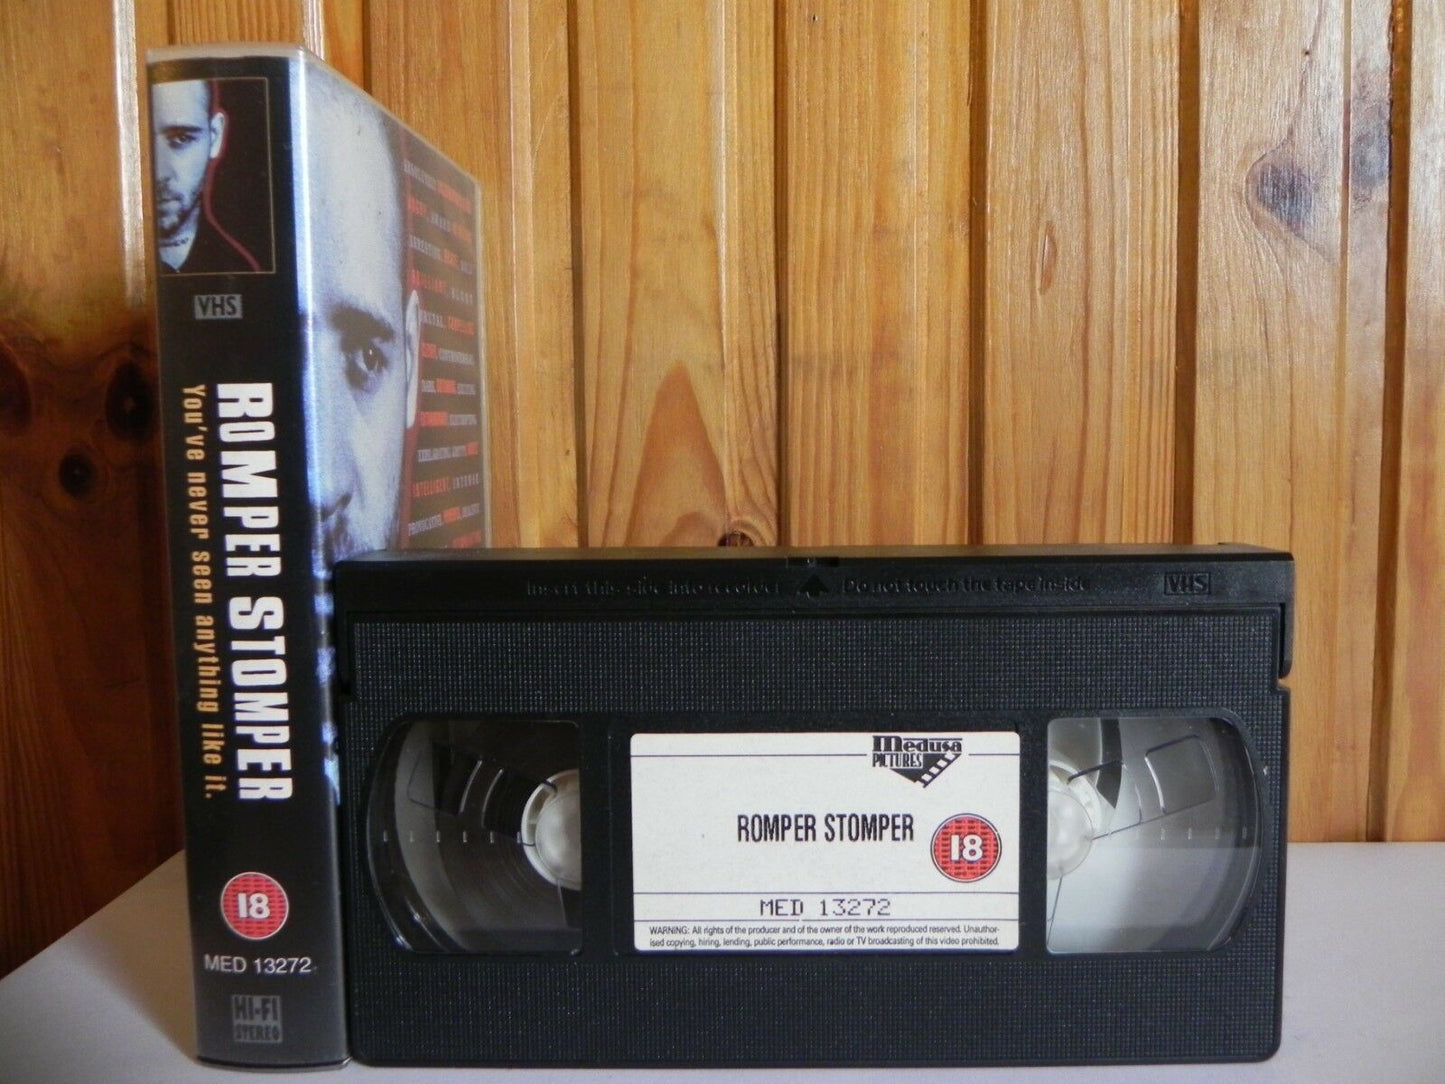 Romper Stomper - Medusa Pictures - Drama - Russell Crowe - Daniel Pollock - VHS-